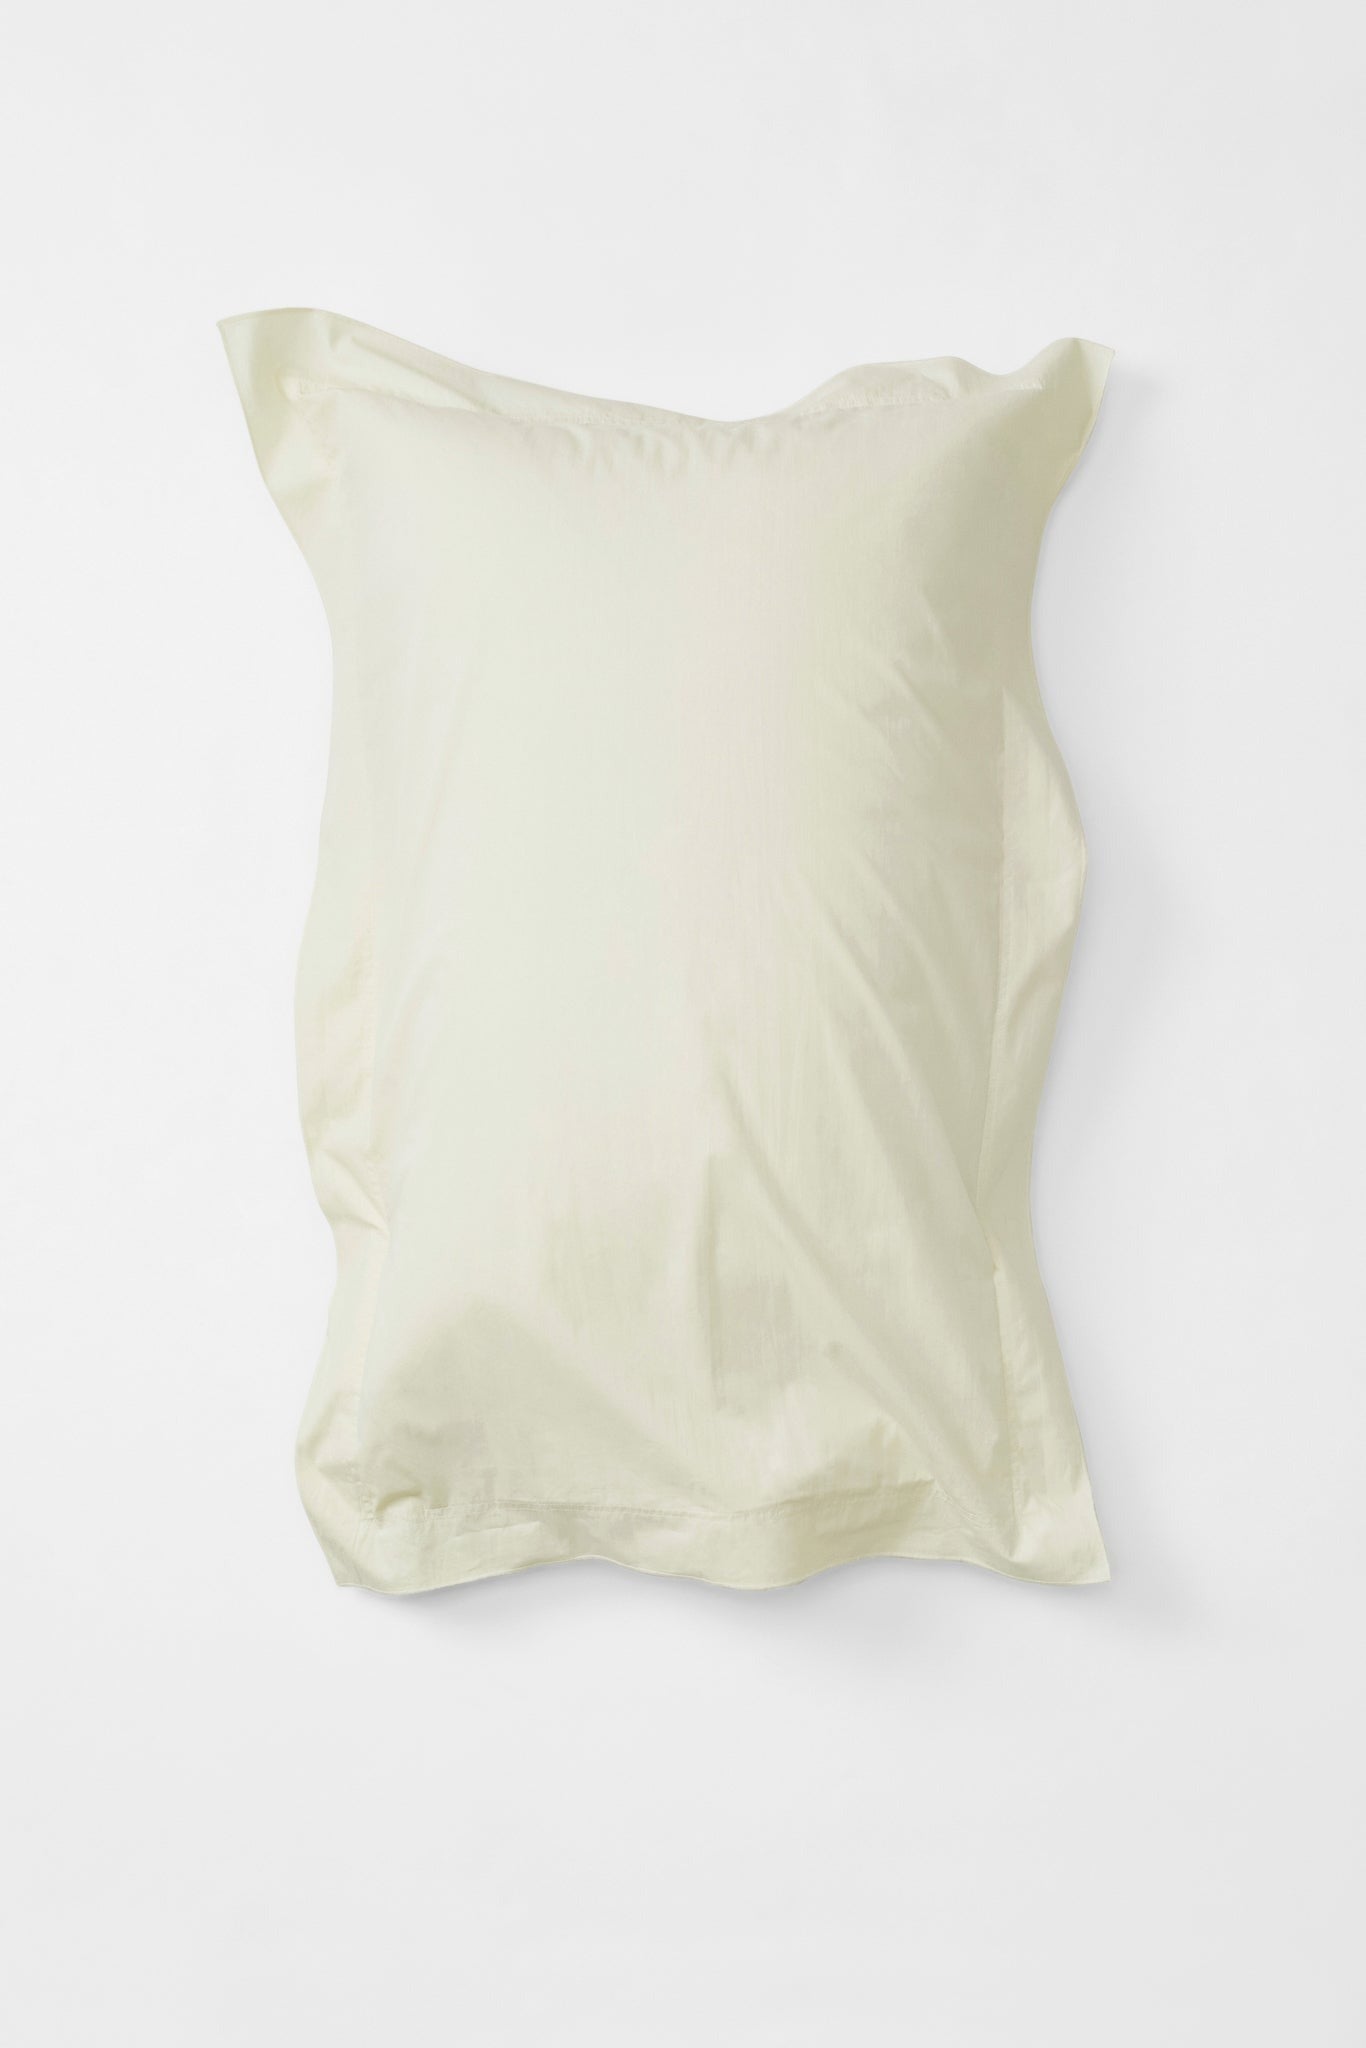 Mono Organic Cotton Percale Pillow Pair - Canvas Pillows in King Pillow